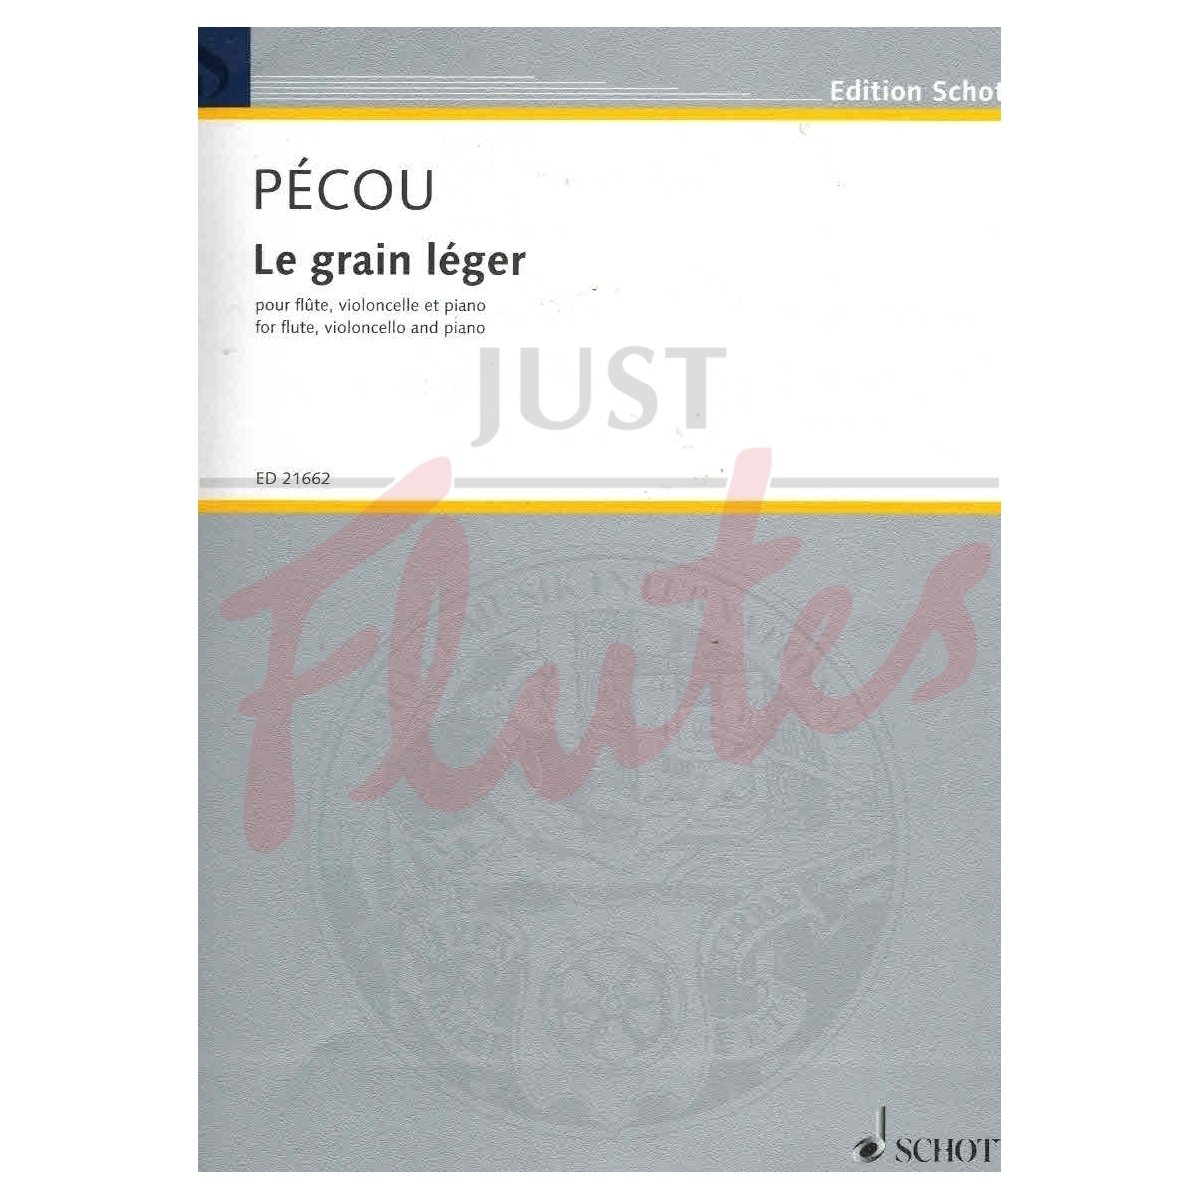 Le Grain Léger (flute, cello and piano)